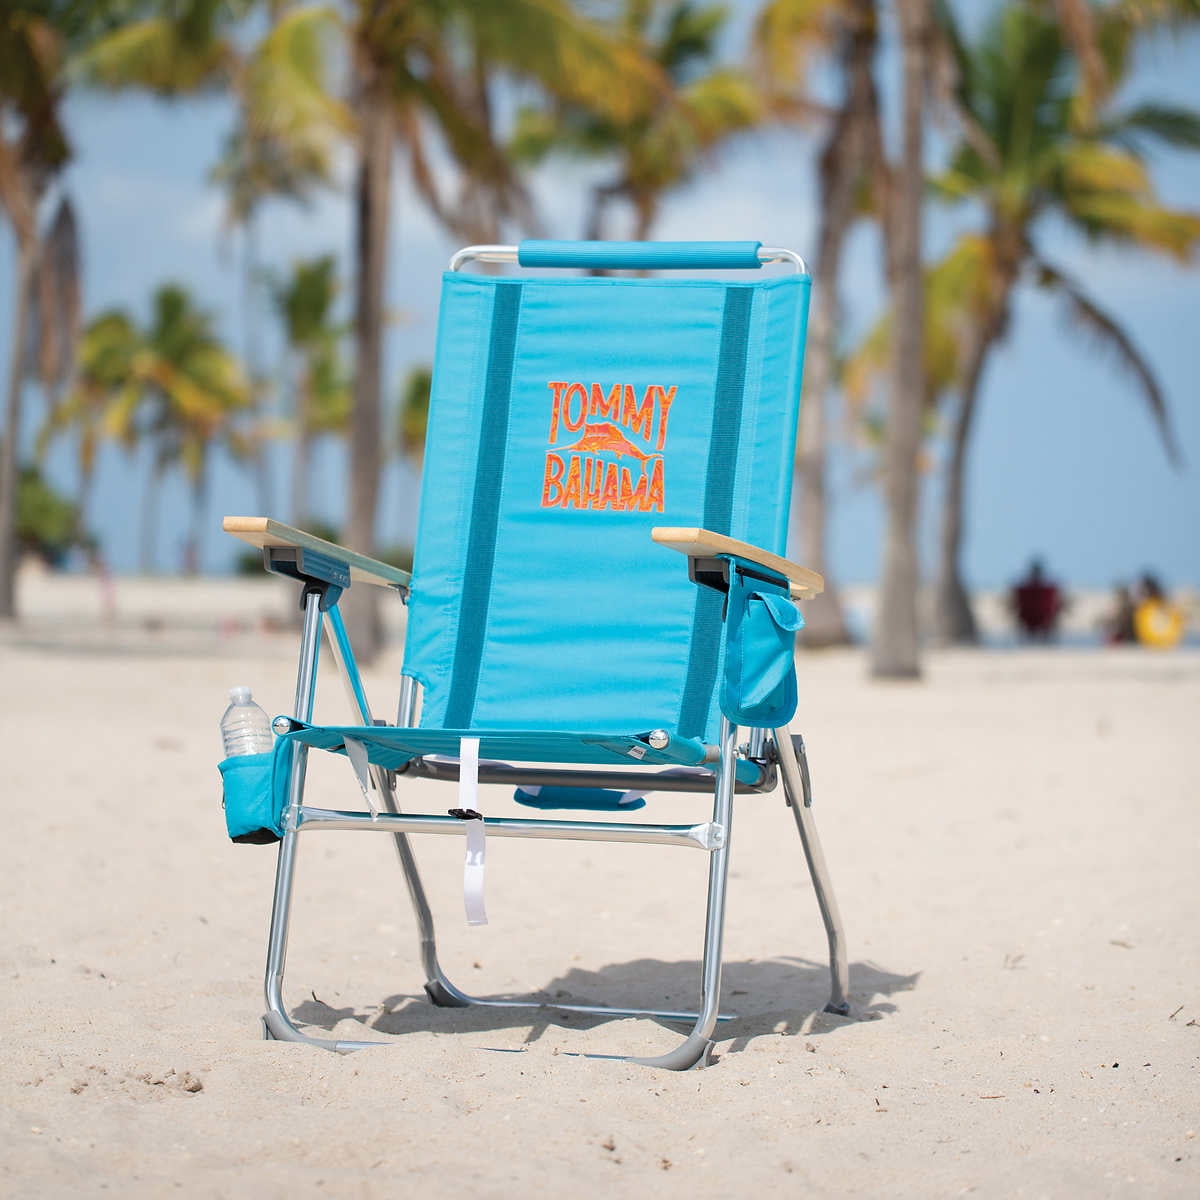 Creatice Bjs Tommy Bahama High Boy Beach Chair for Small Space